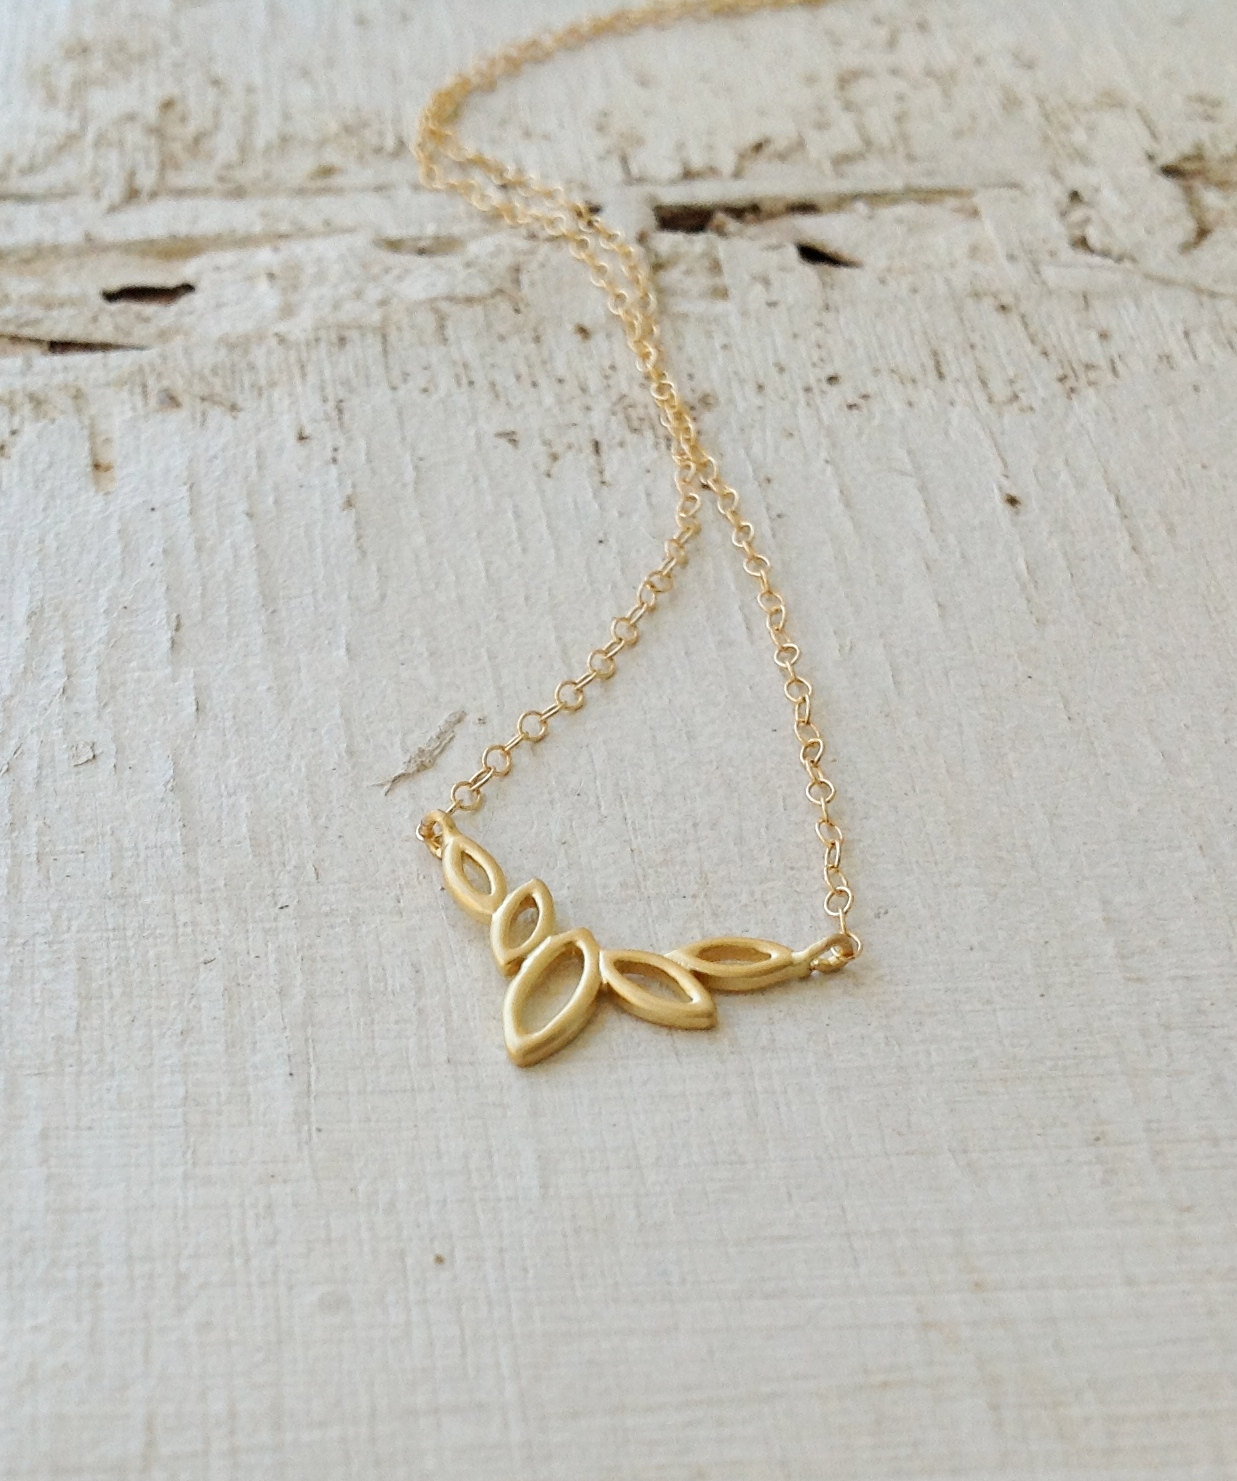 Gold Necklace, Gold Flower Necklace, Lotus Necklace, Dainty Necklace, Simple Gold Necklace, 1gold Filled Necklace - D5